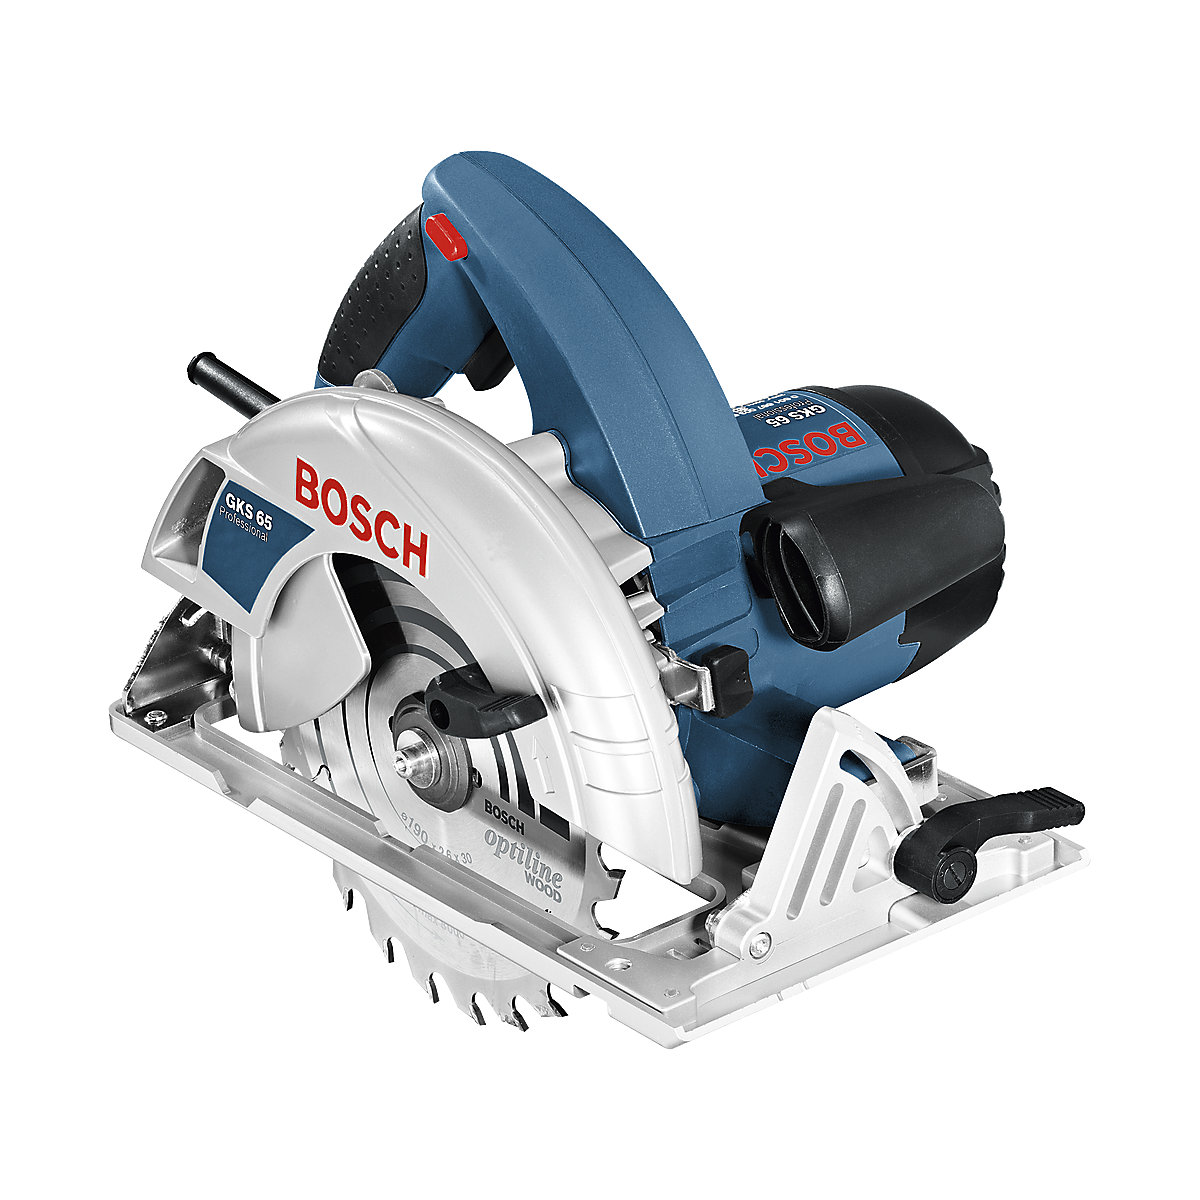 GKS 65 Professional hand-held circular saw - Bosch